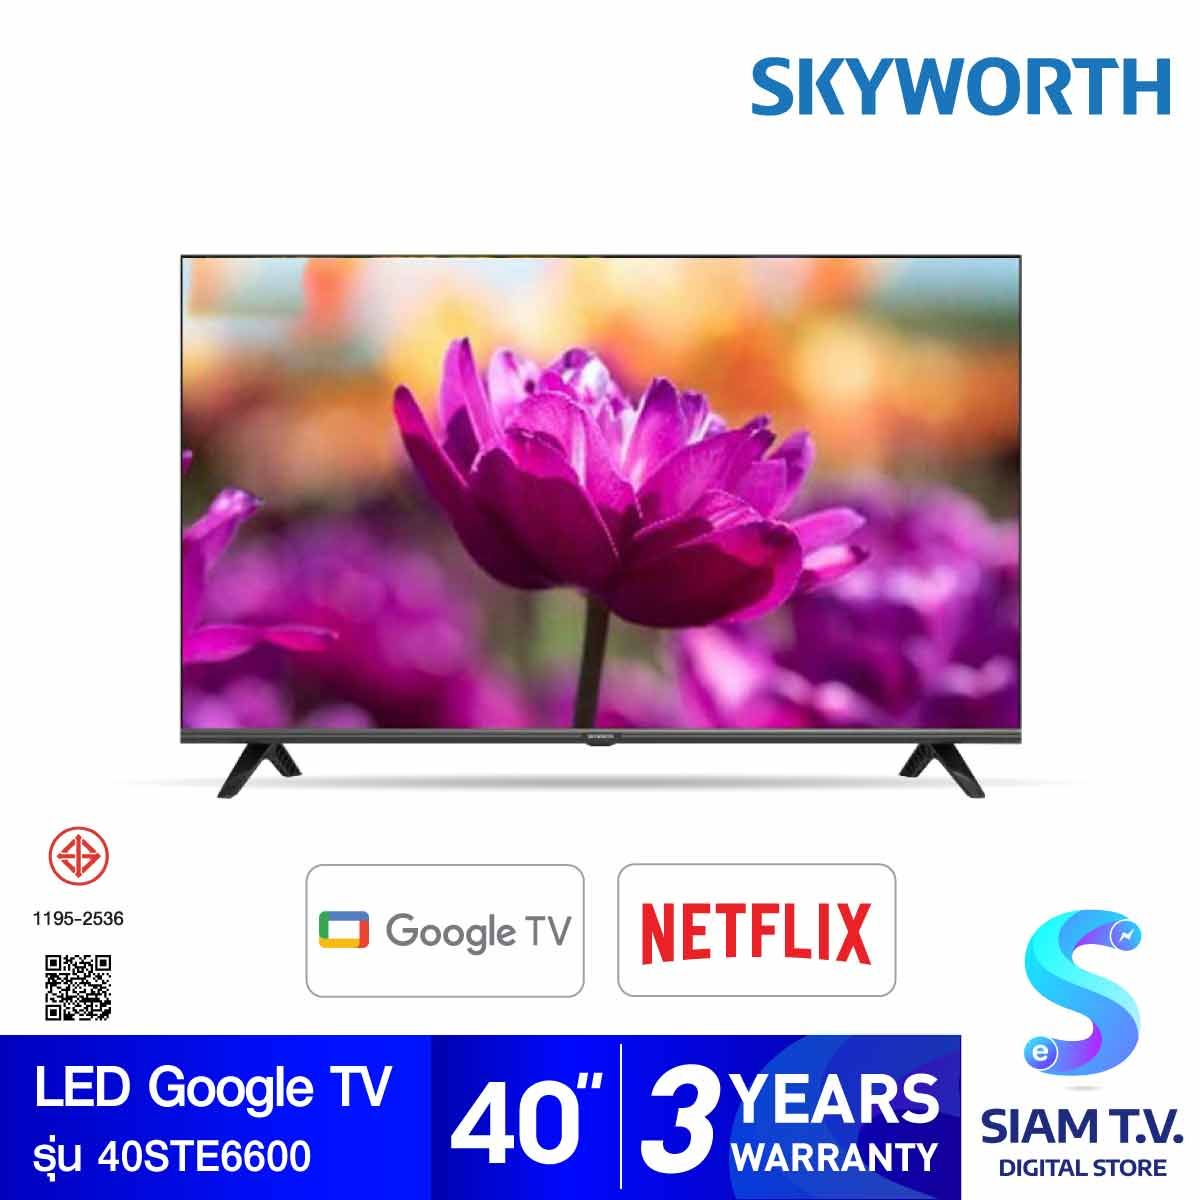 SKYWORTH LED Google TV รุ่น 40STE6600 Google TV สมาร์ททีวี ขนาด 40 นิ้ว